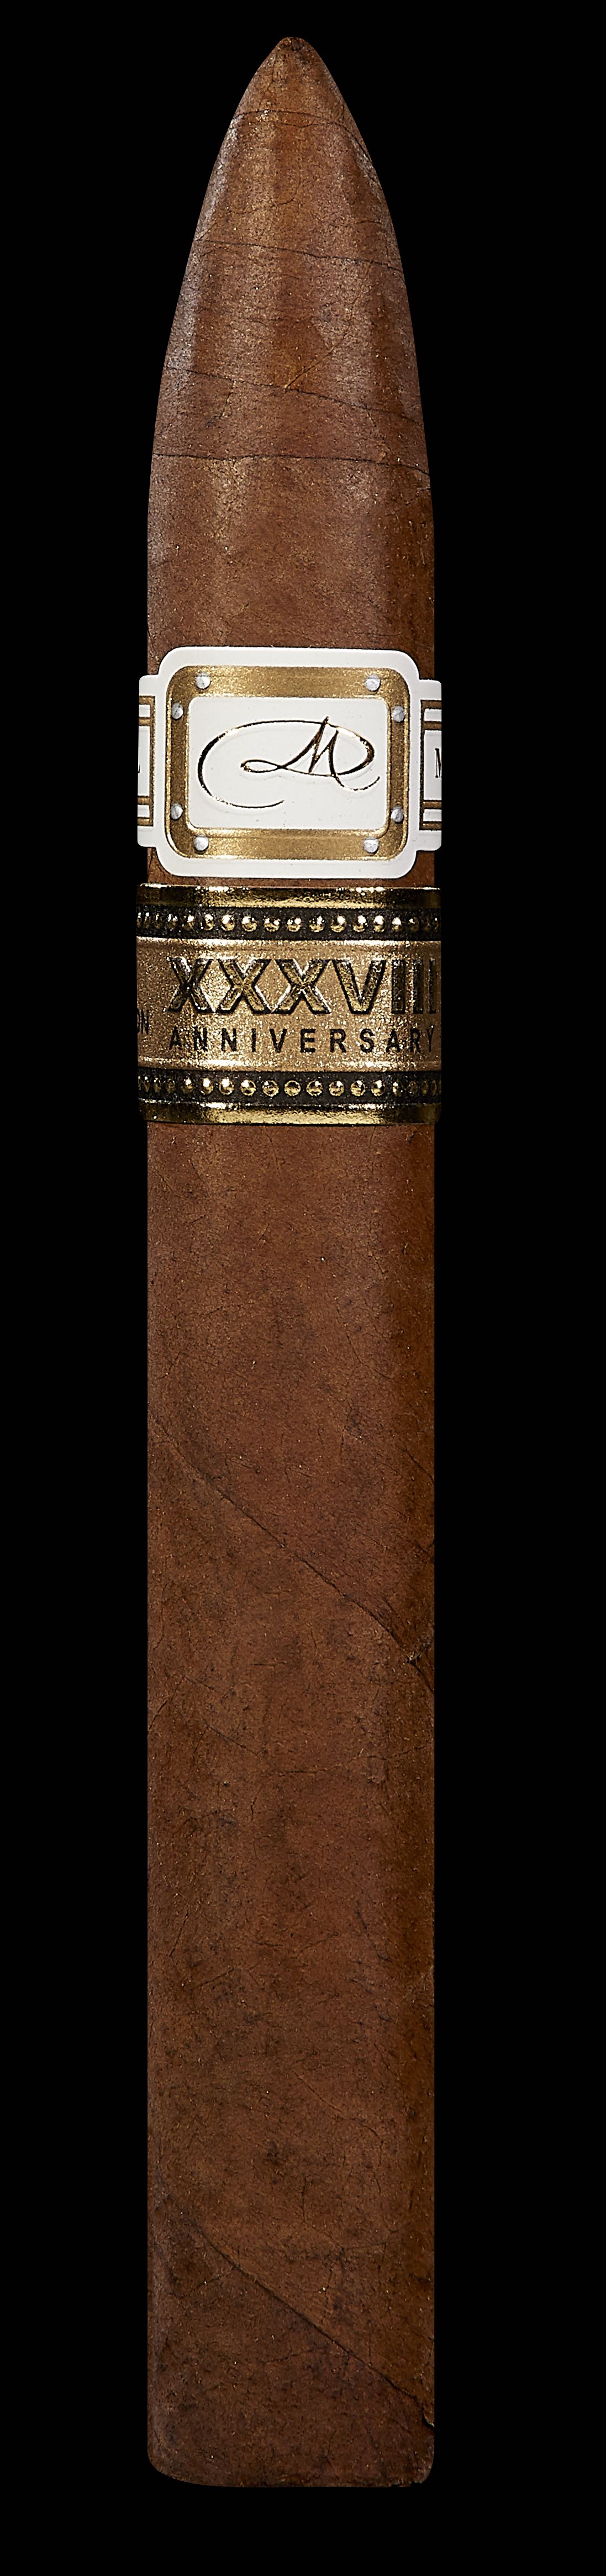 DM Fuente 38th XXXVIII Anniversary Cigar   Credit Barone Photography